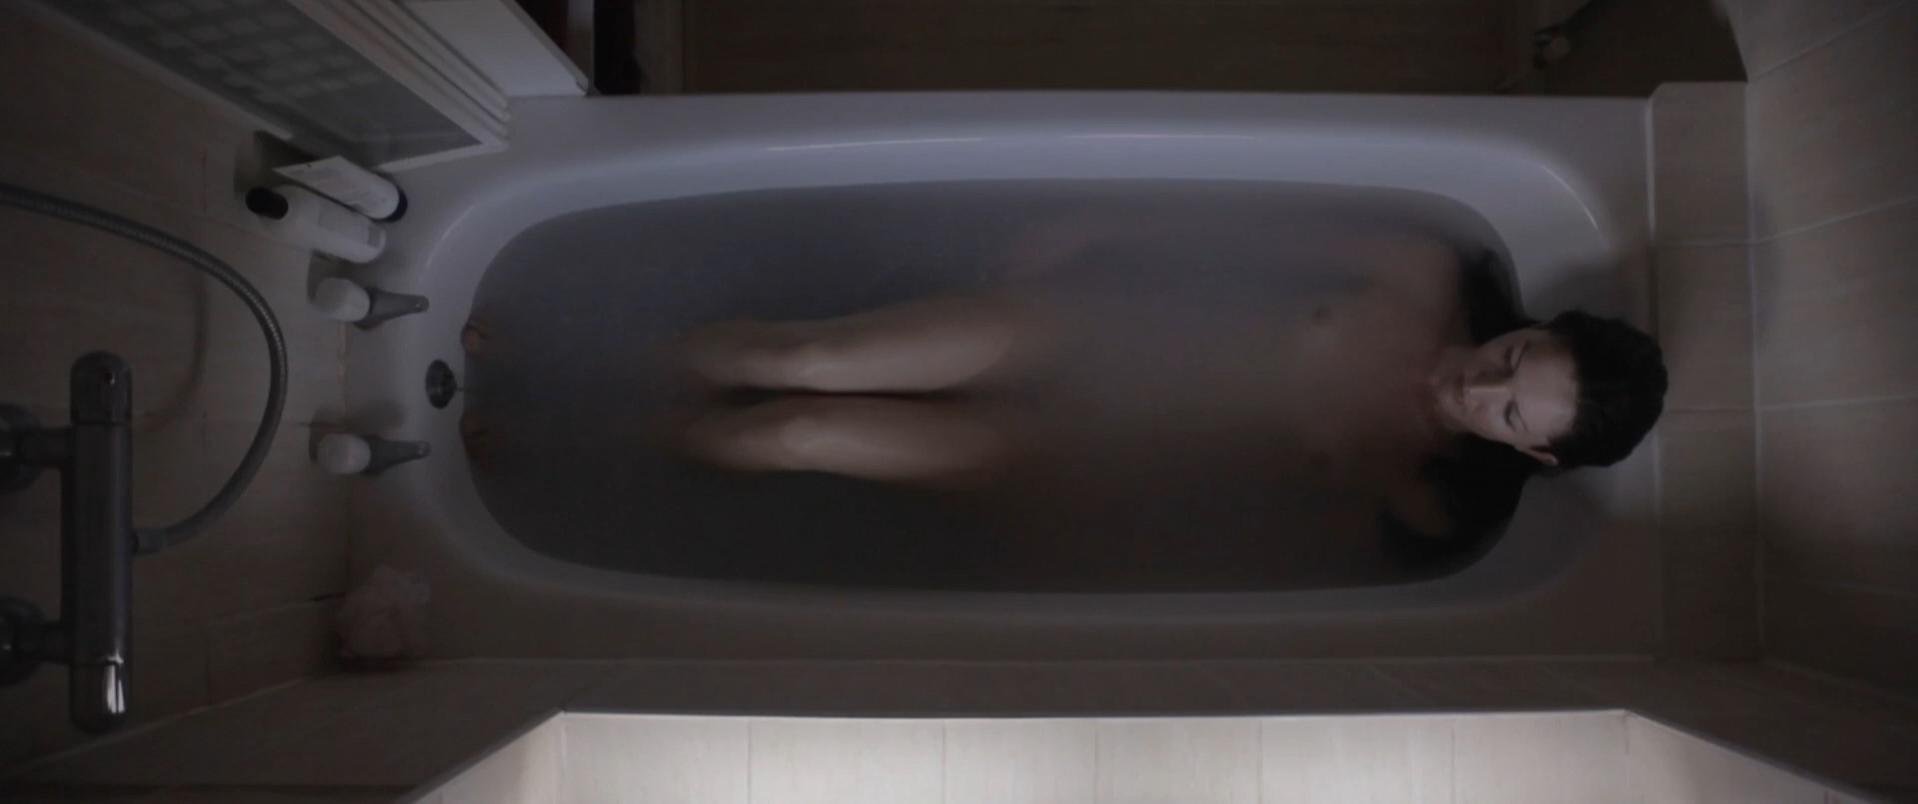 Eaoifa Forward nude, Rachel Warren nude - The Snare (2017)